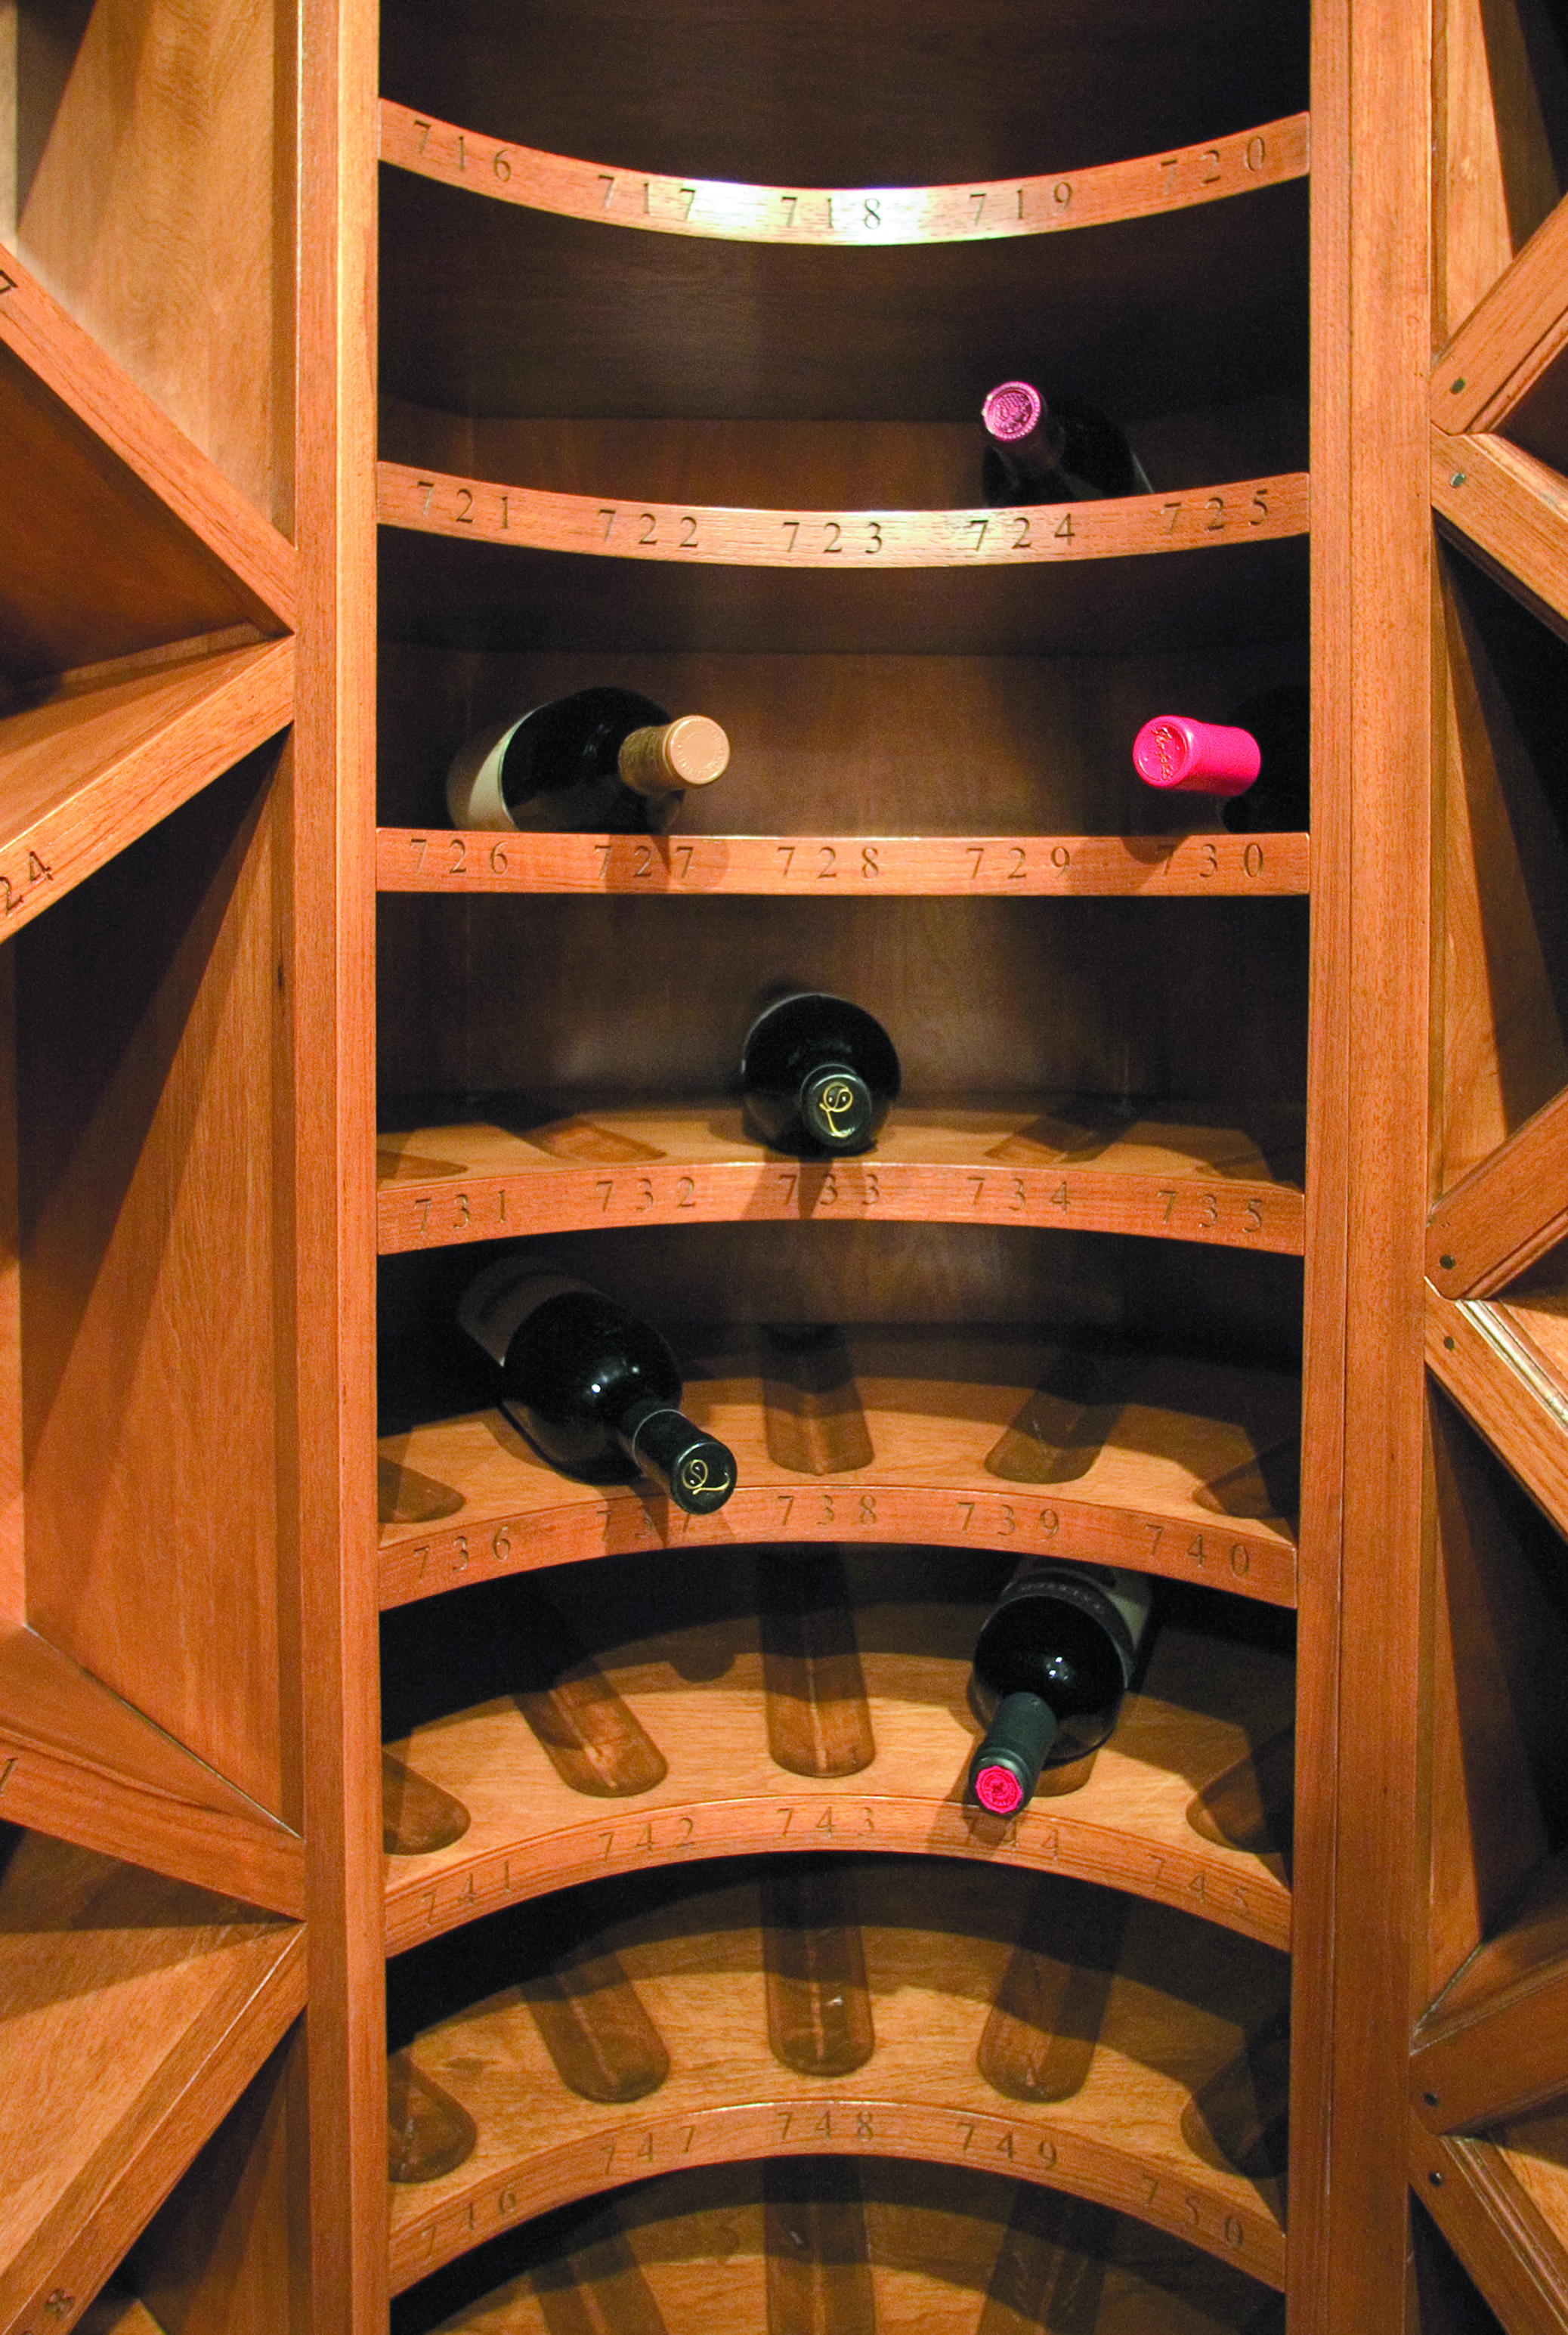  wine shelves designed and built by Tempo Designs Gabriel McKeagney 